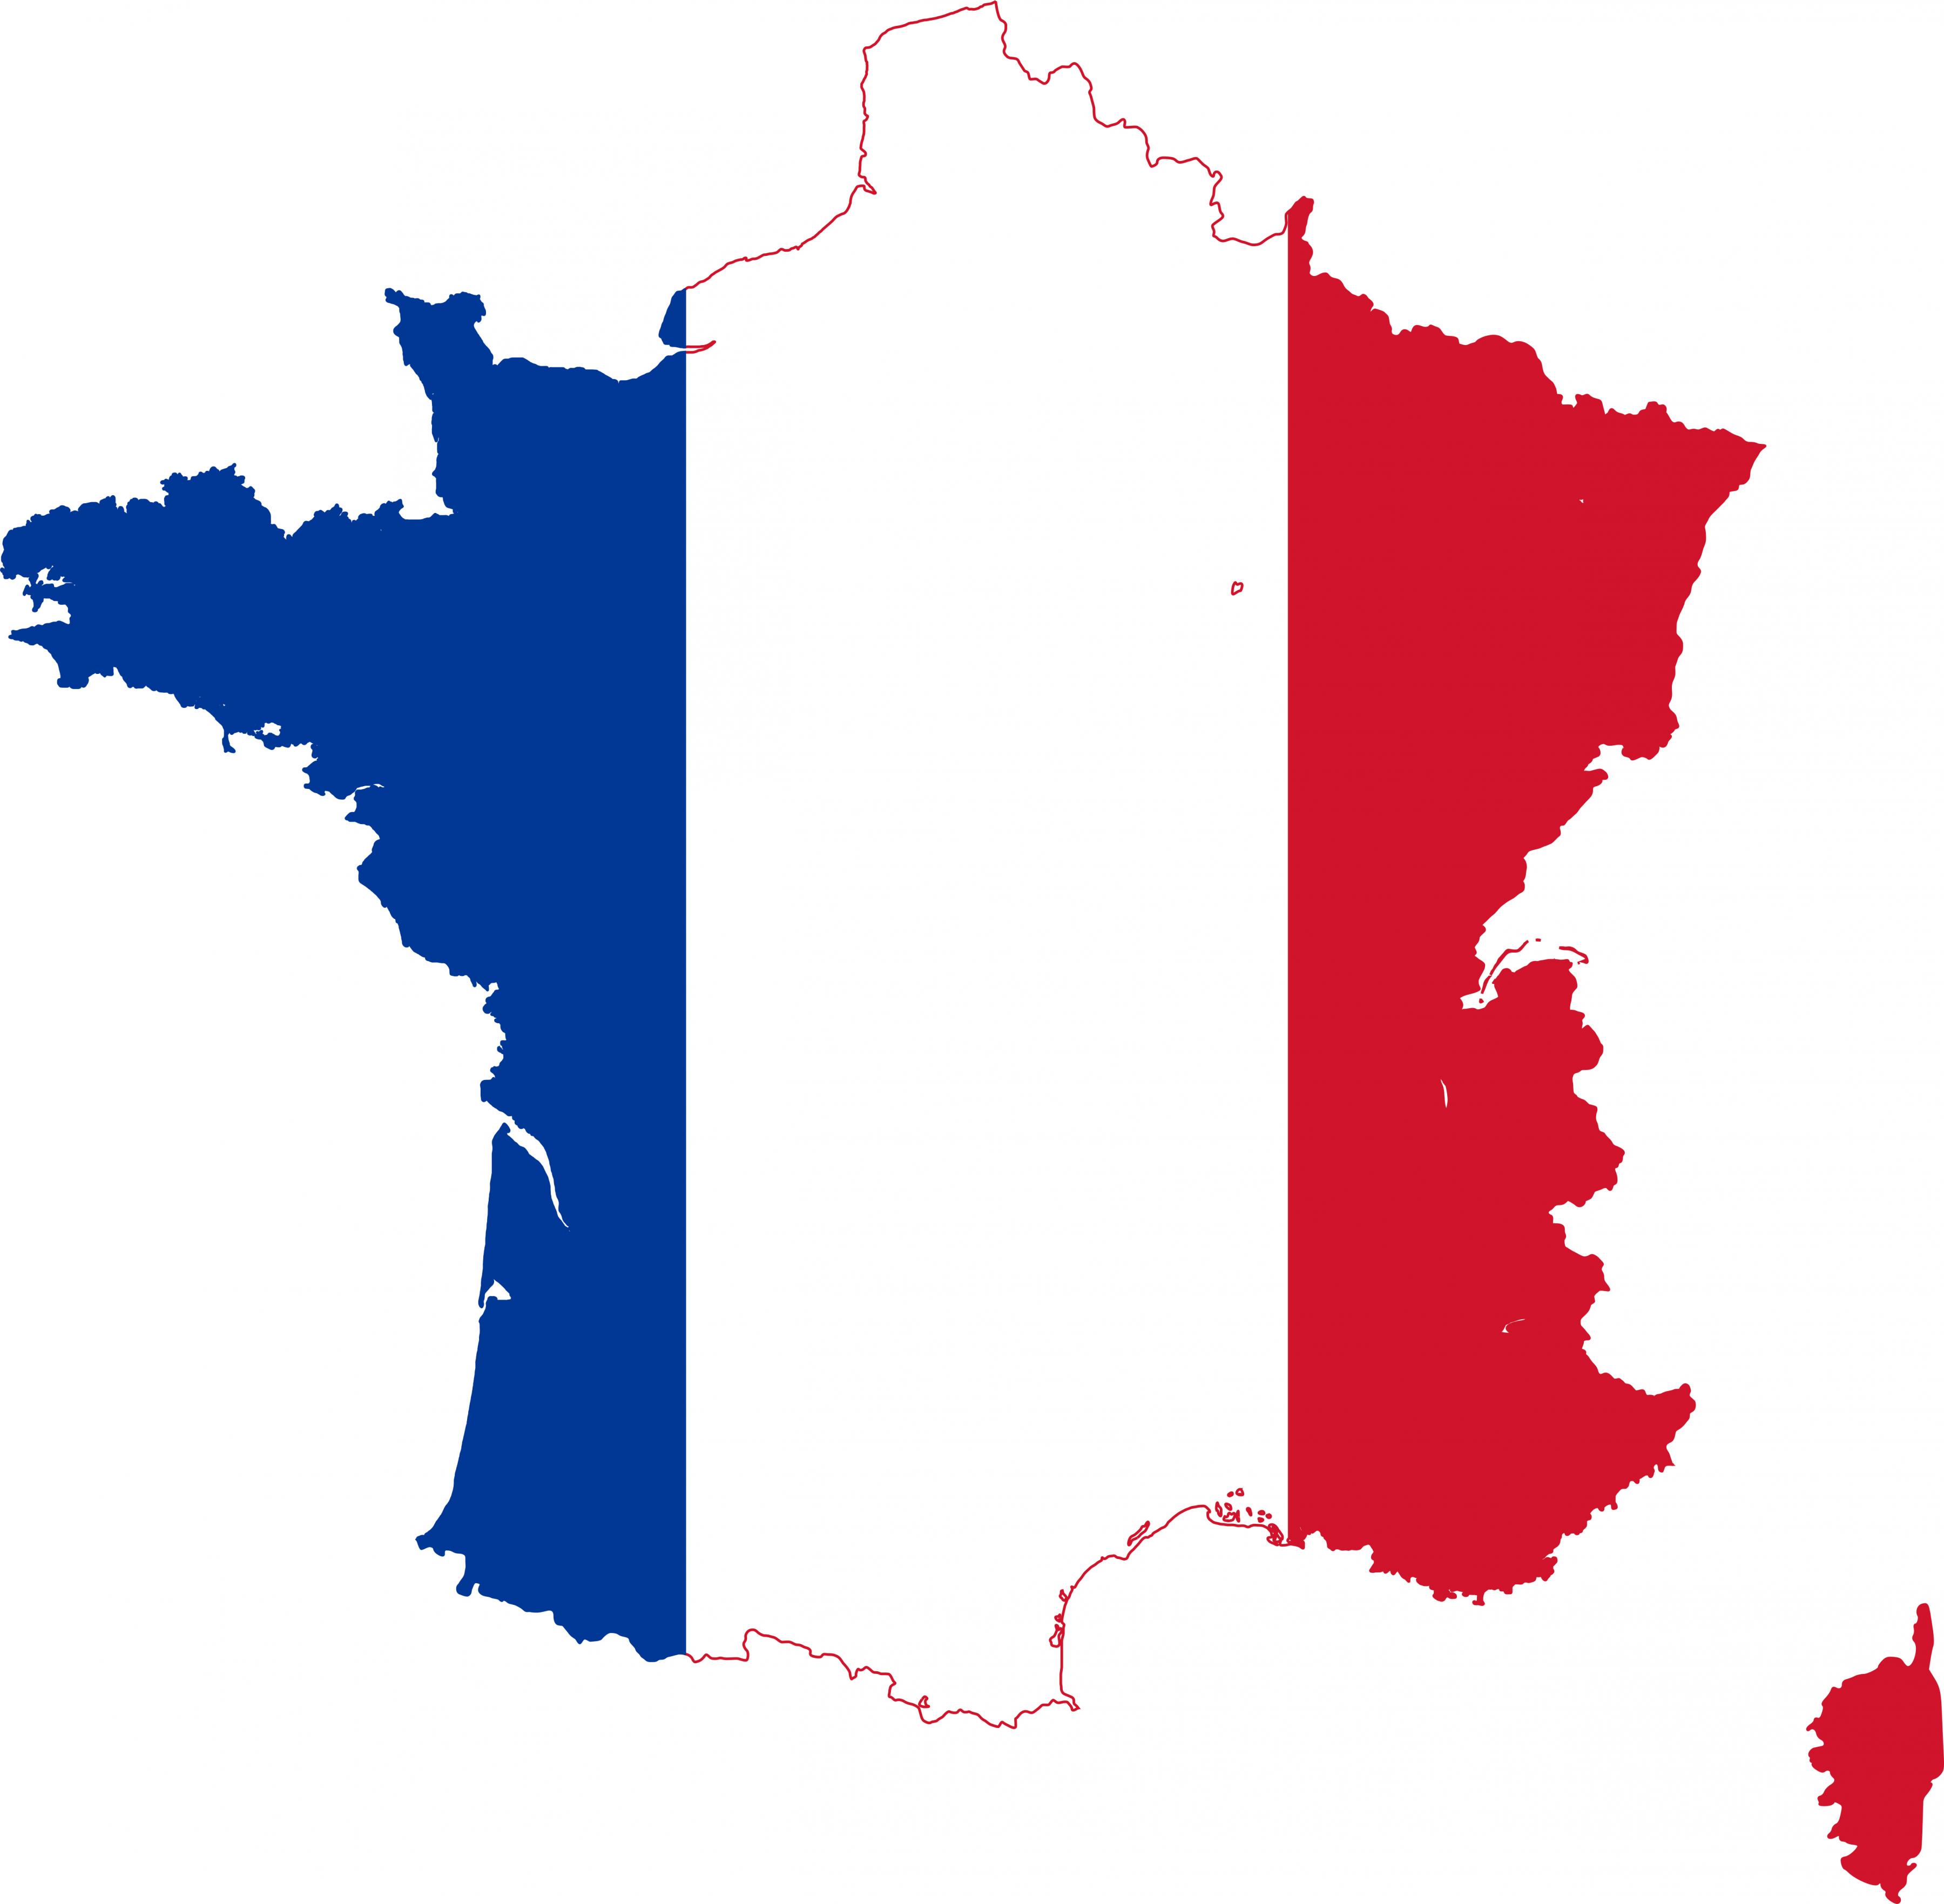 History of France, Flag, Summary, Maps, & Key Events